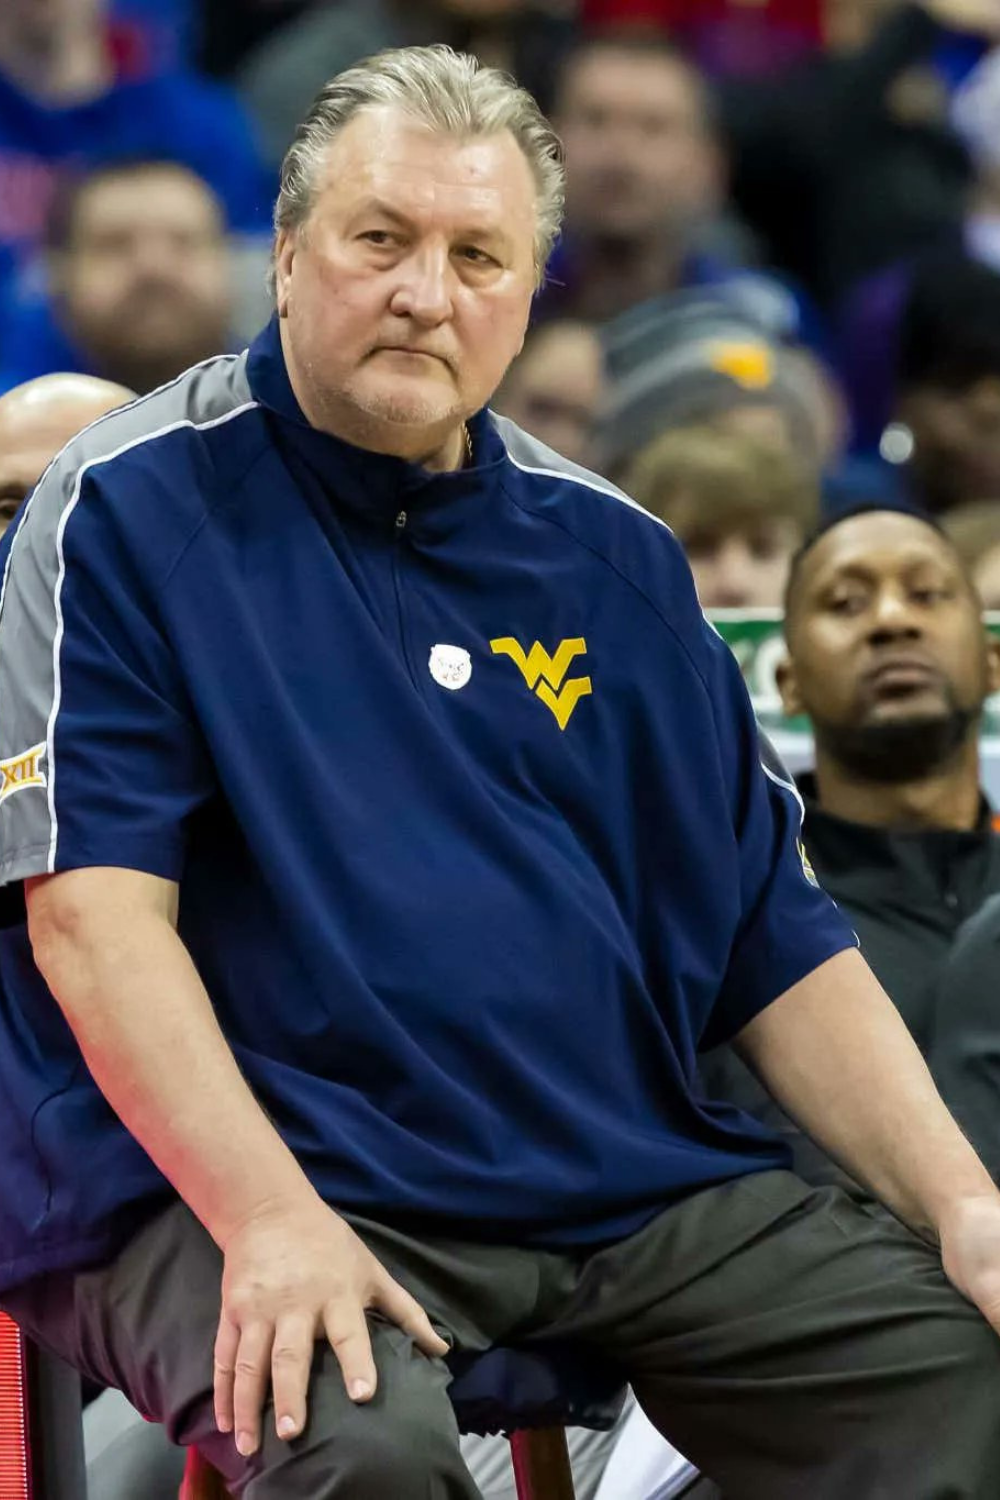 Bob Huggins, The Former Coach of WVU Men's Basketball Team